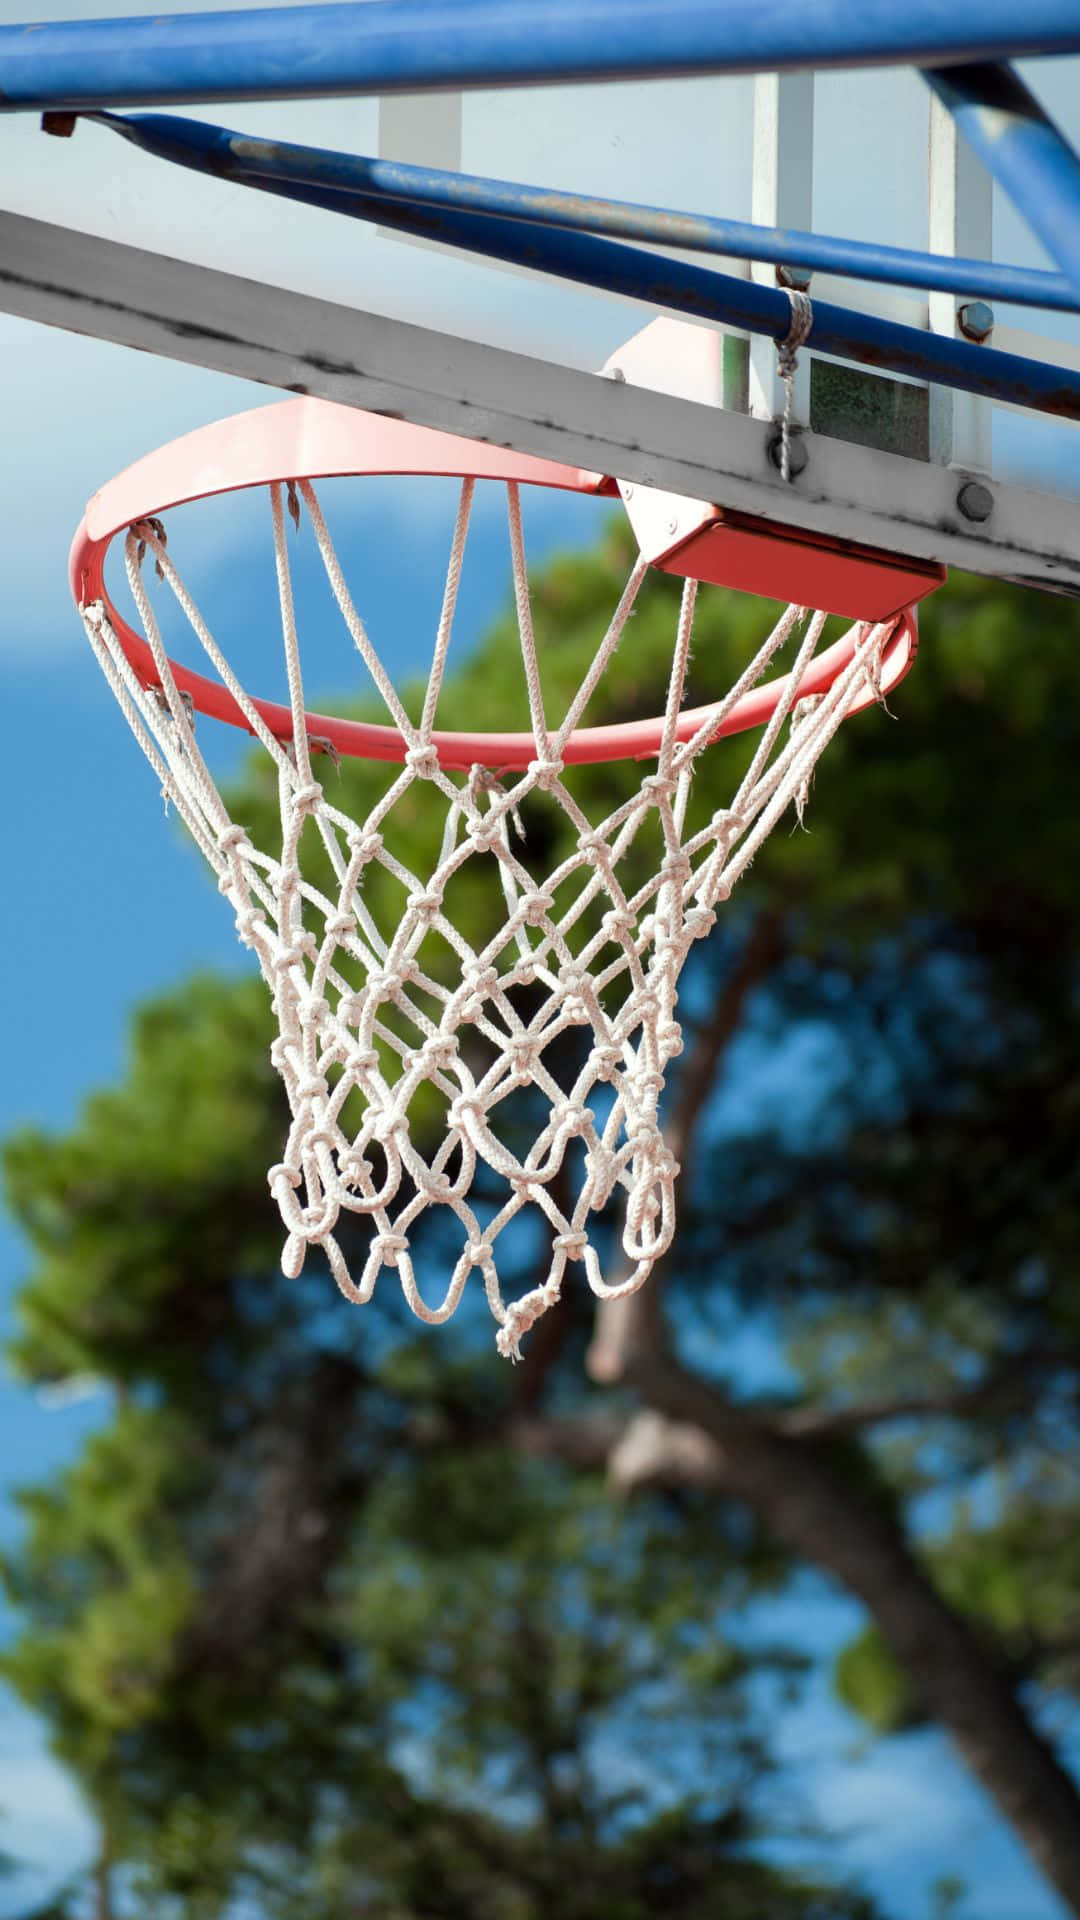 Outdoor Basketball Hoop Against Blue Sky Background